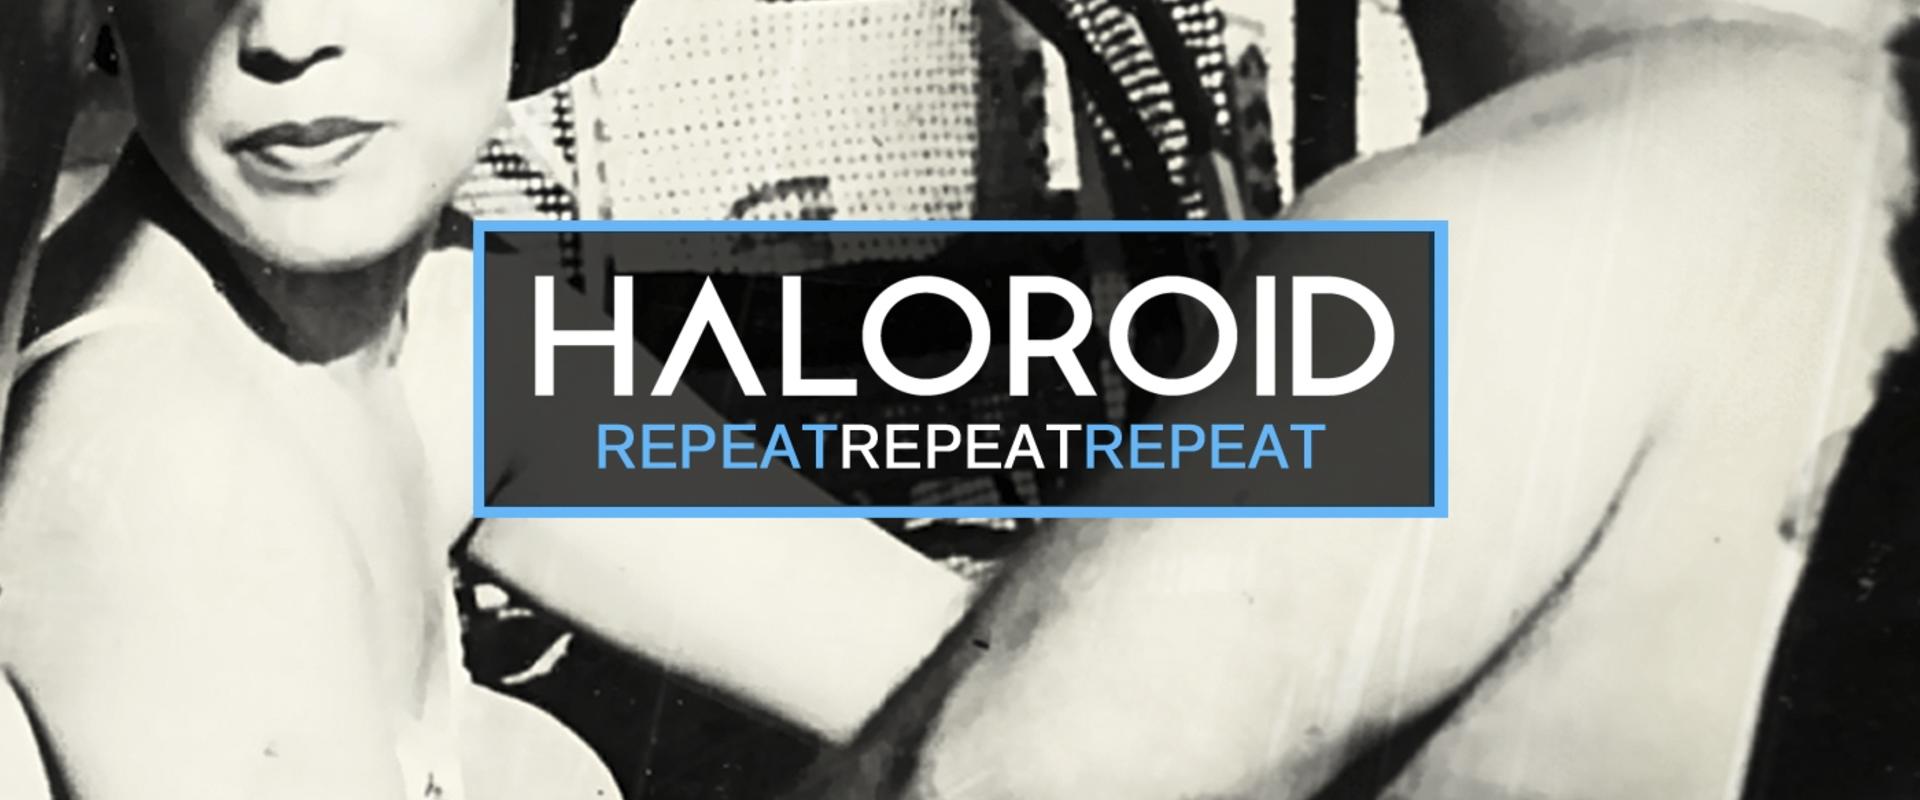 Haloroid - RepeatRepeatRepeat